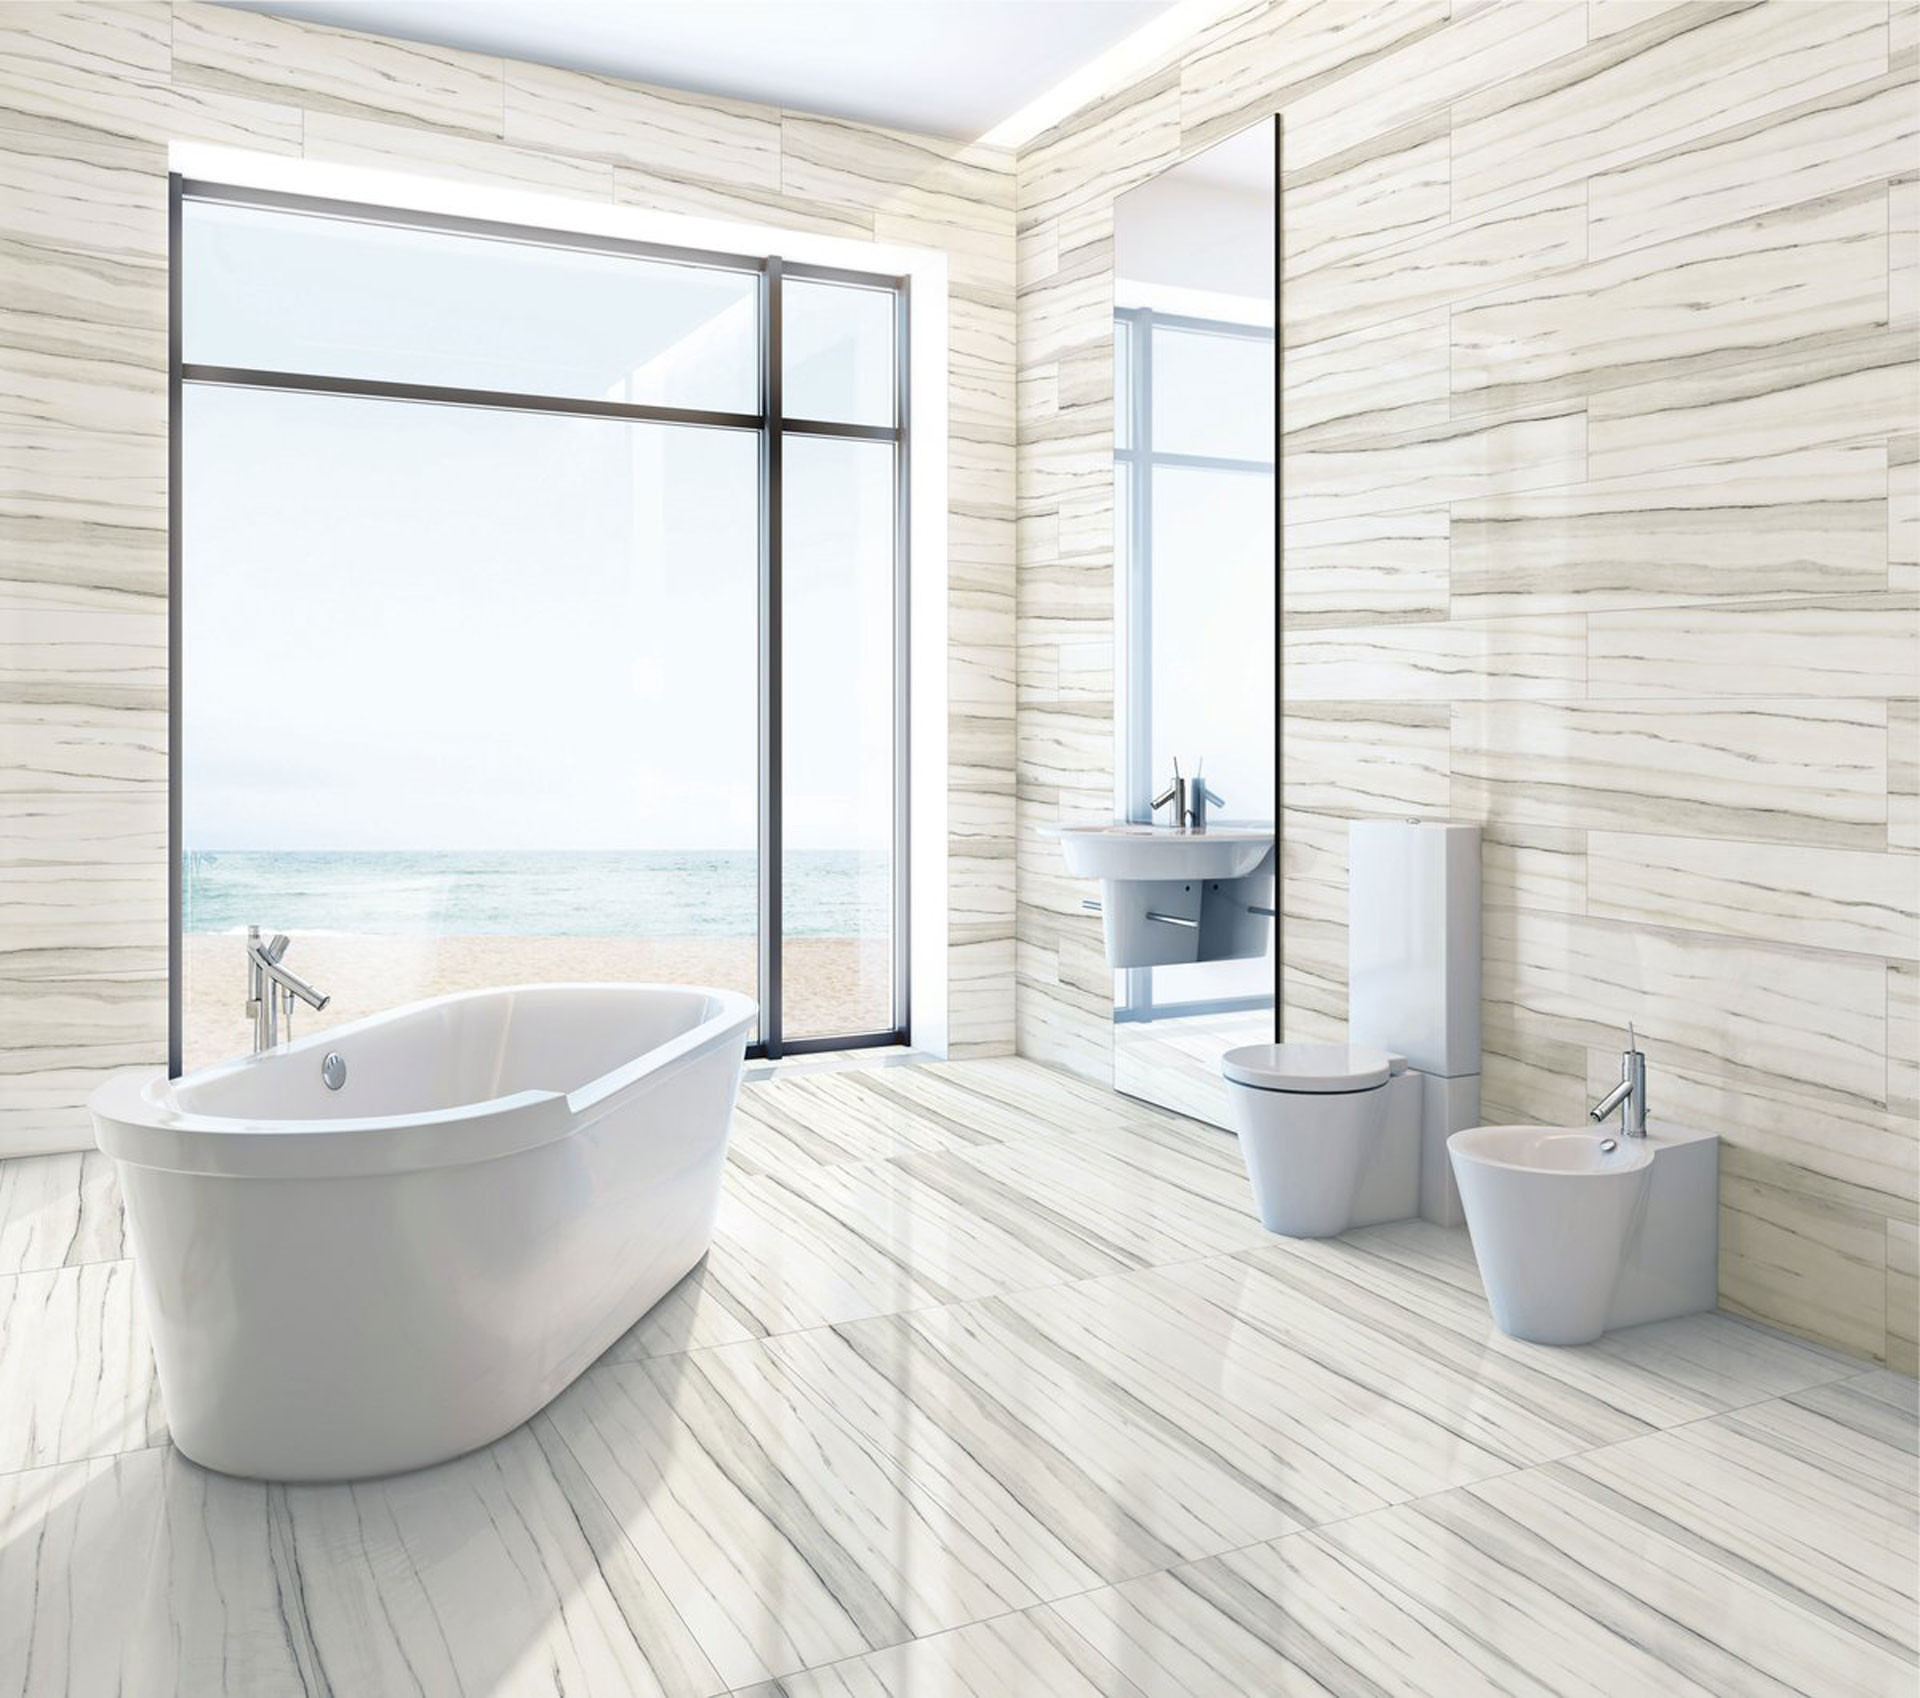 Tiled Bathroom Floors
 The contemporary bathroom with Stonepeak’s porcelain floor